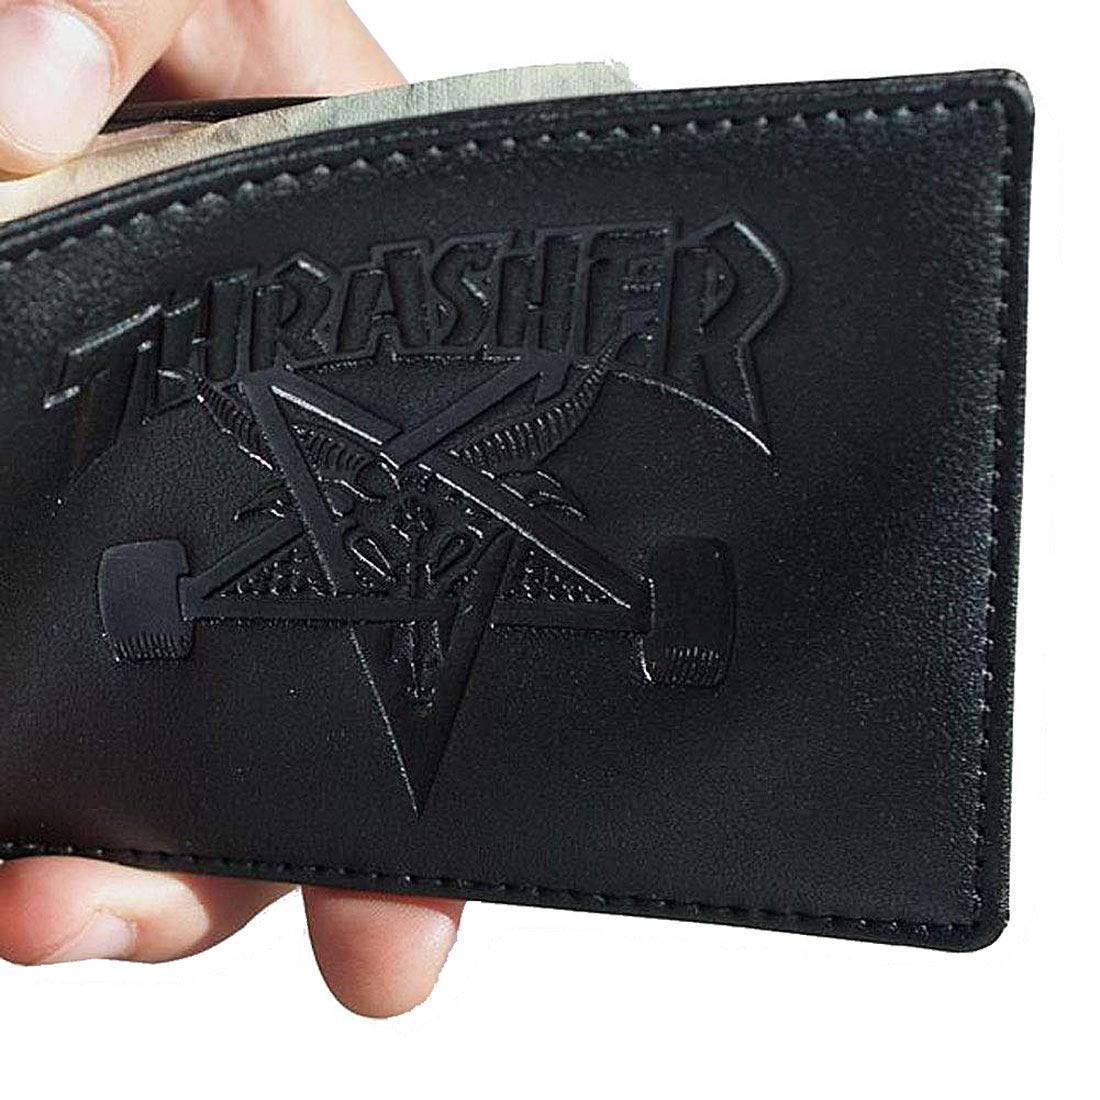 Thrasher Skate Goat Leather Wallet - Black